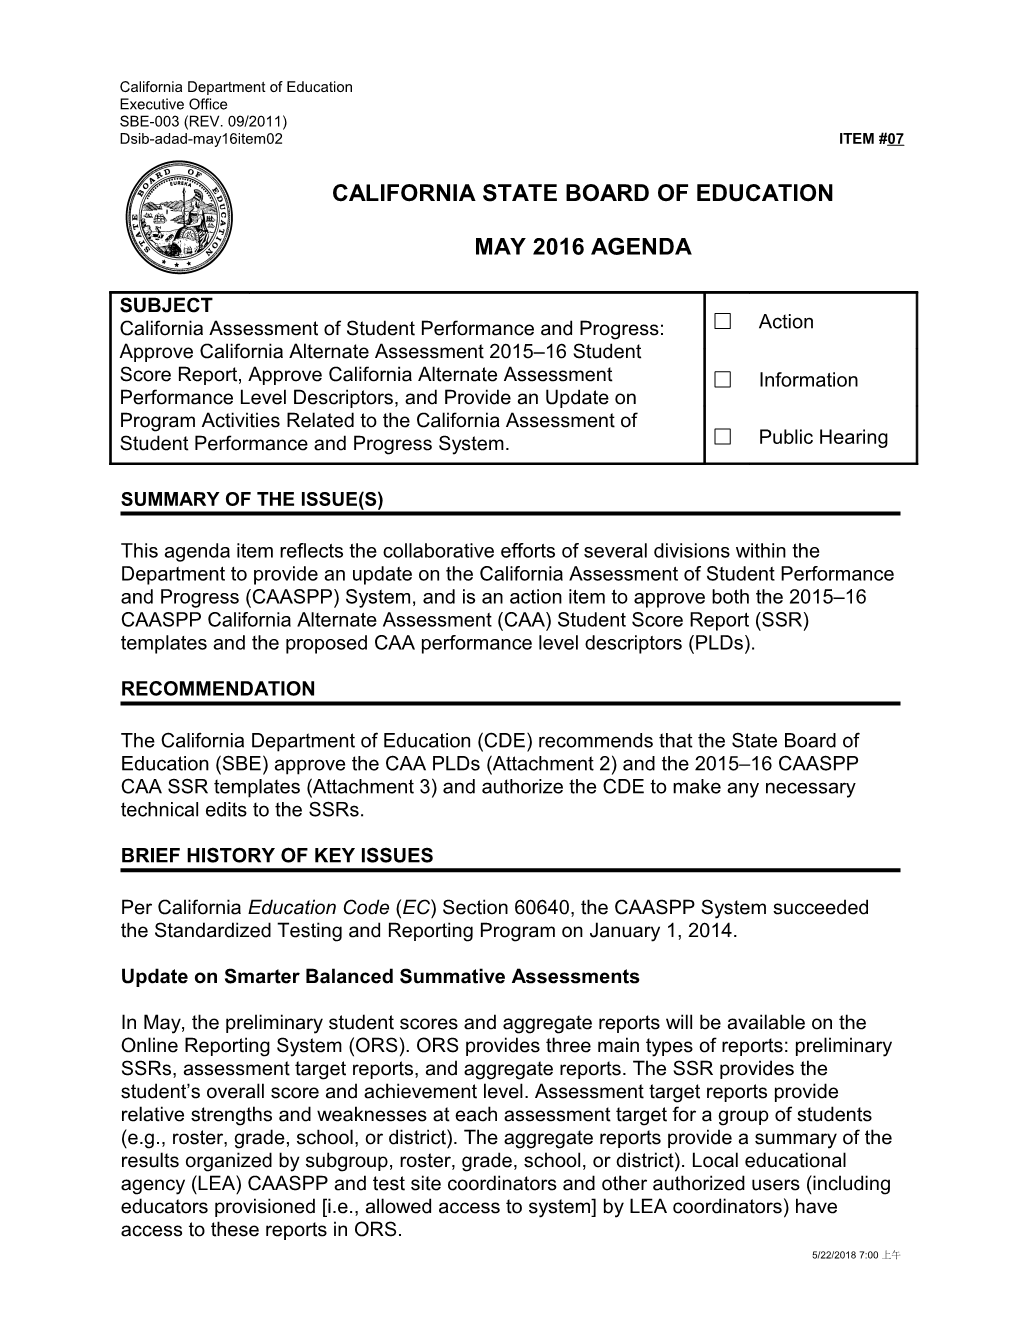 May 2016 Agenda Item 07 - Meeting Agendas (CA State Board of Education)